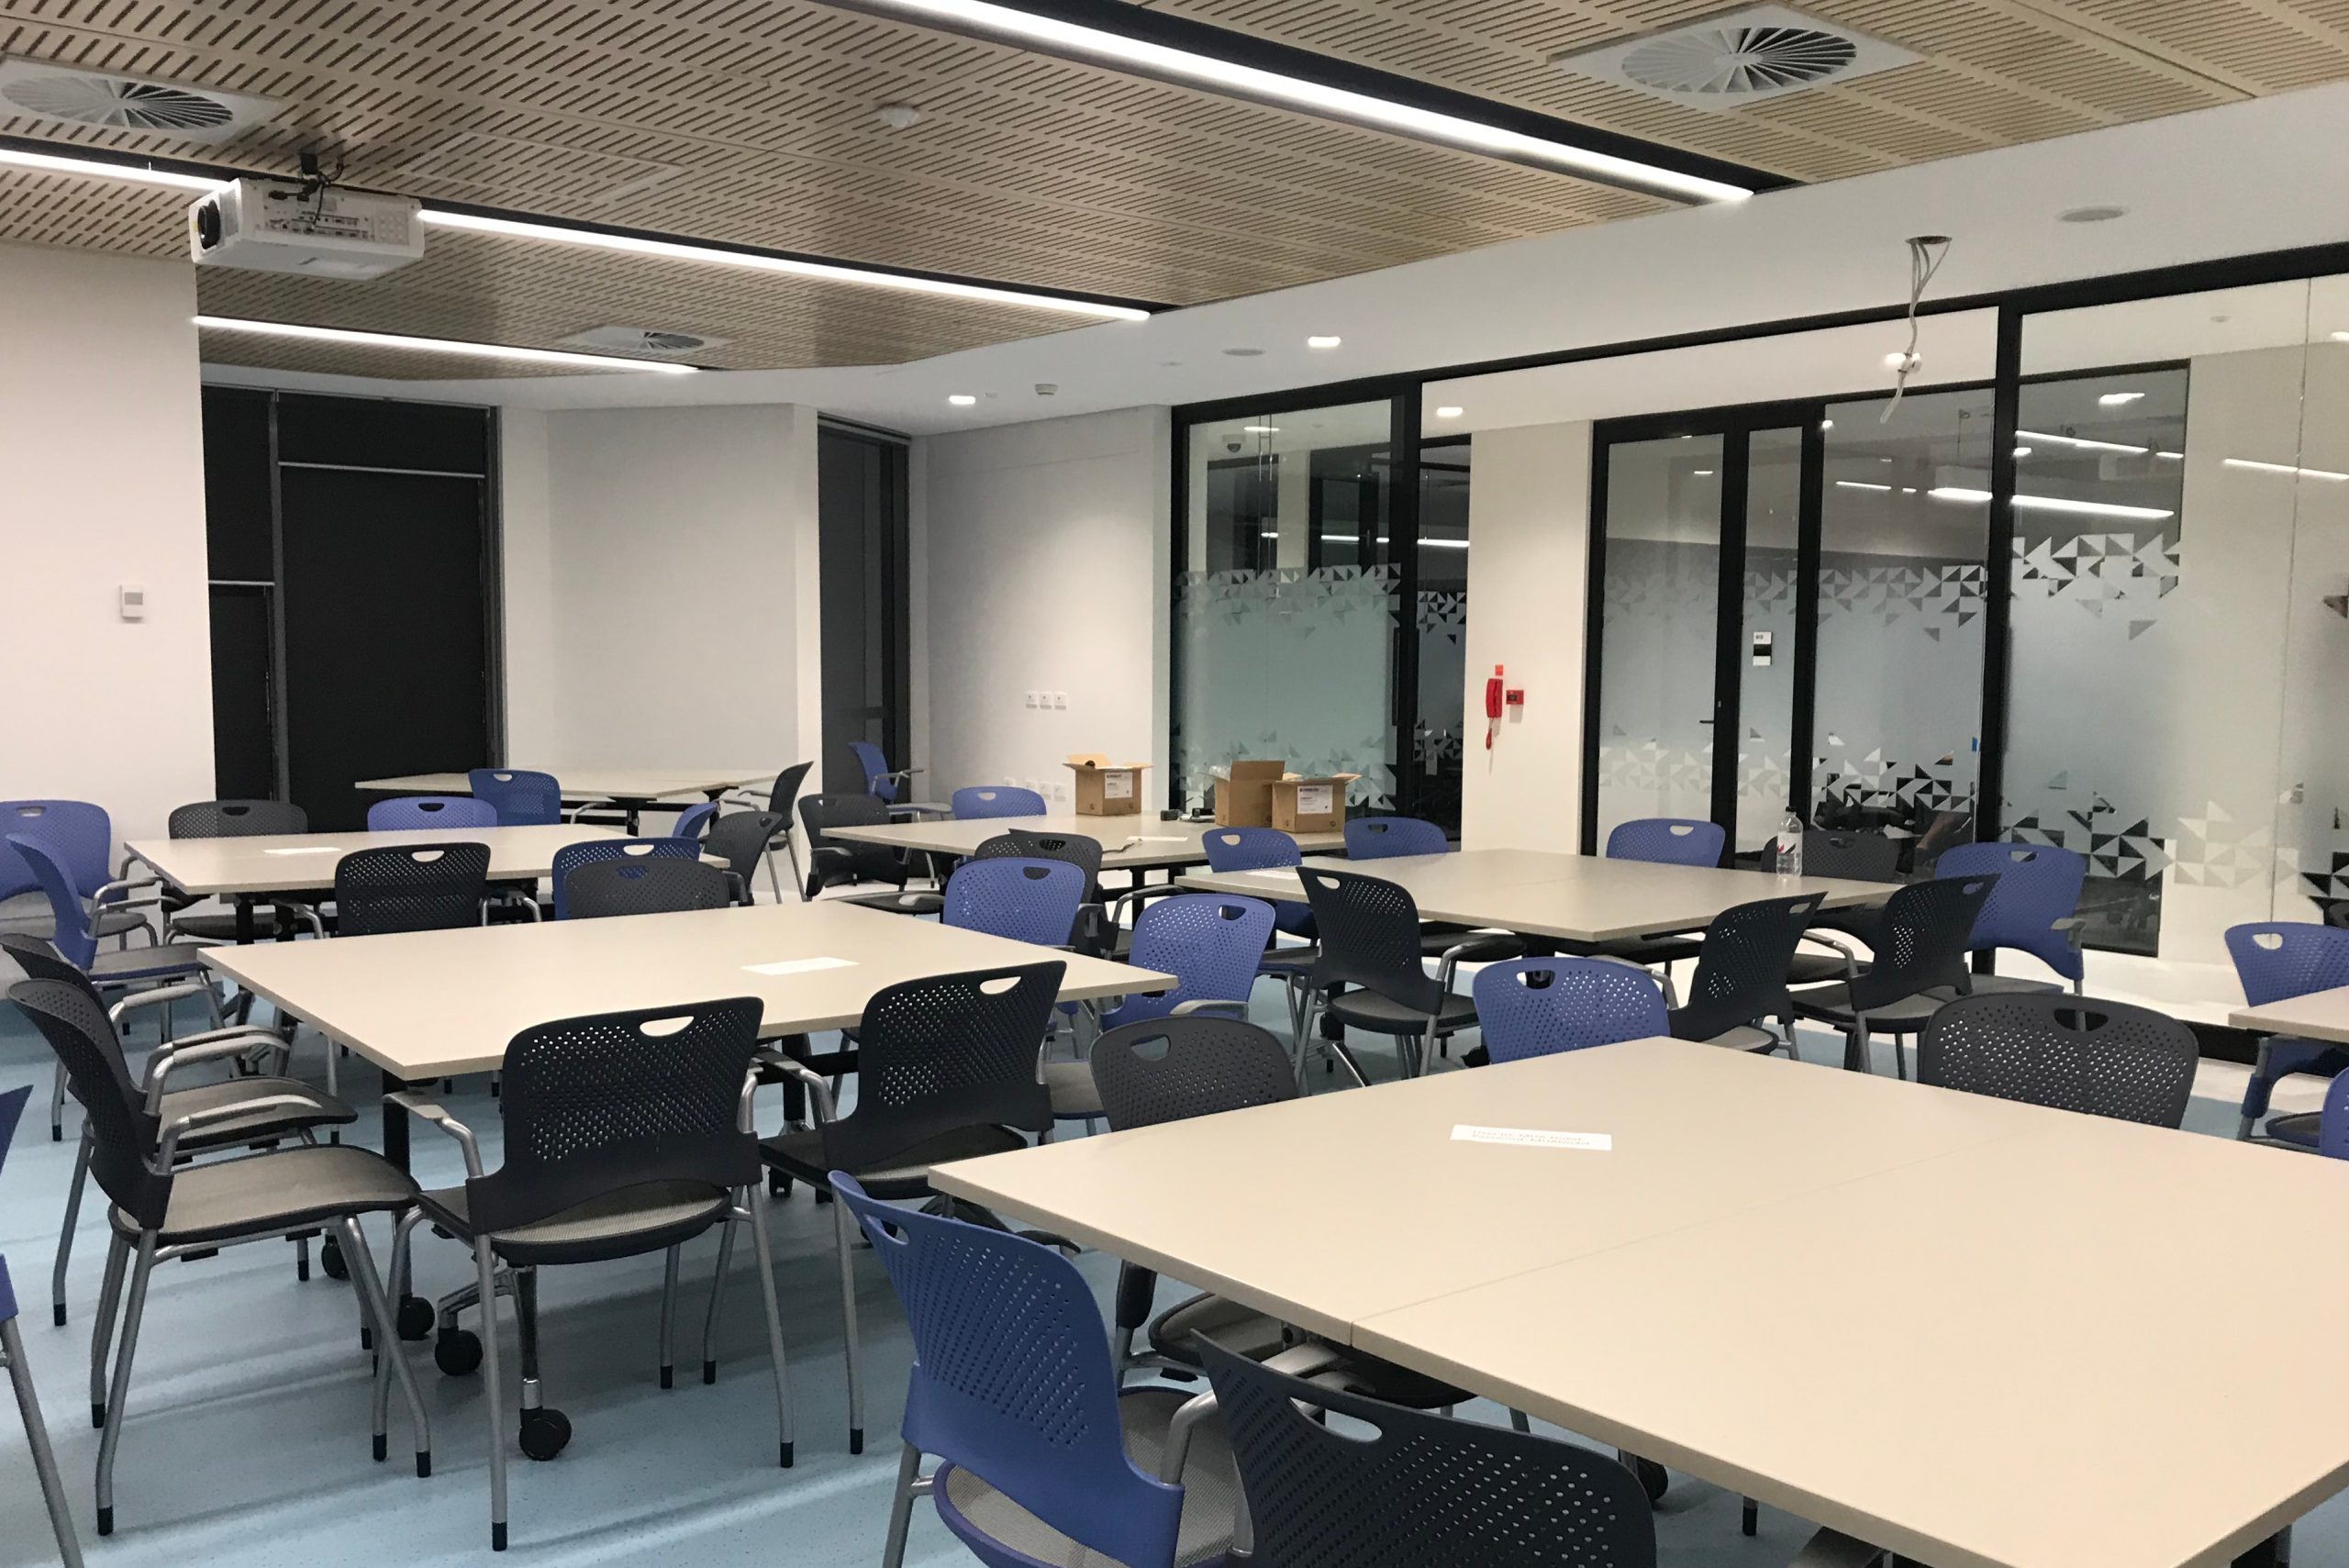 4 classroom macquarie university f10a taylor construction education fitout